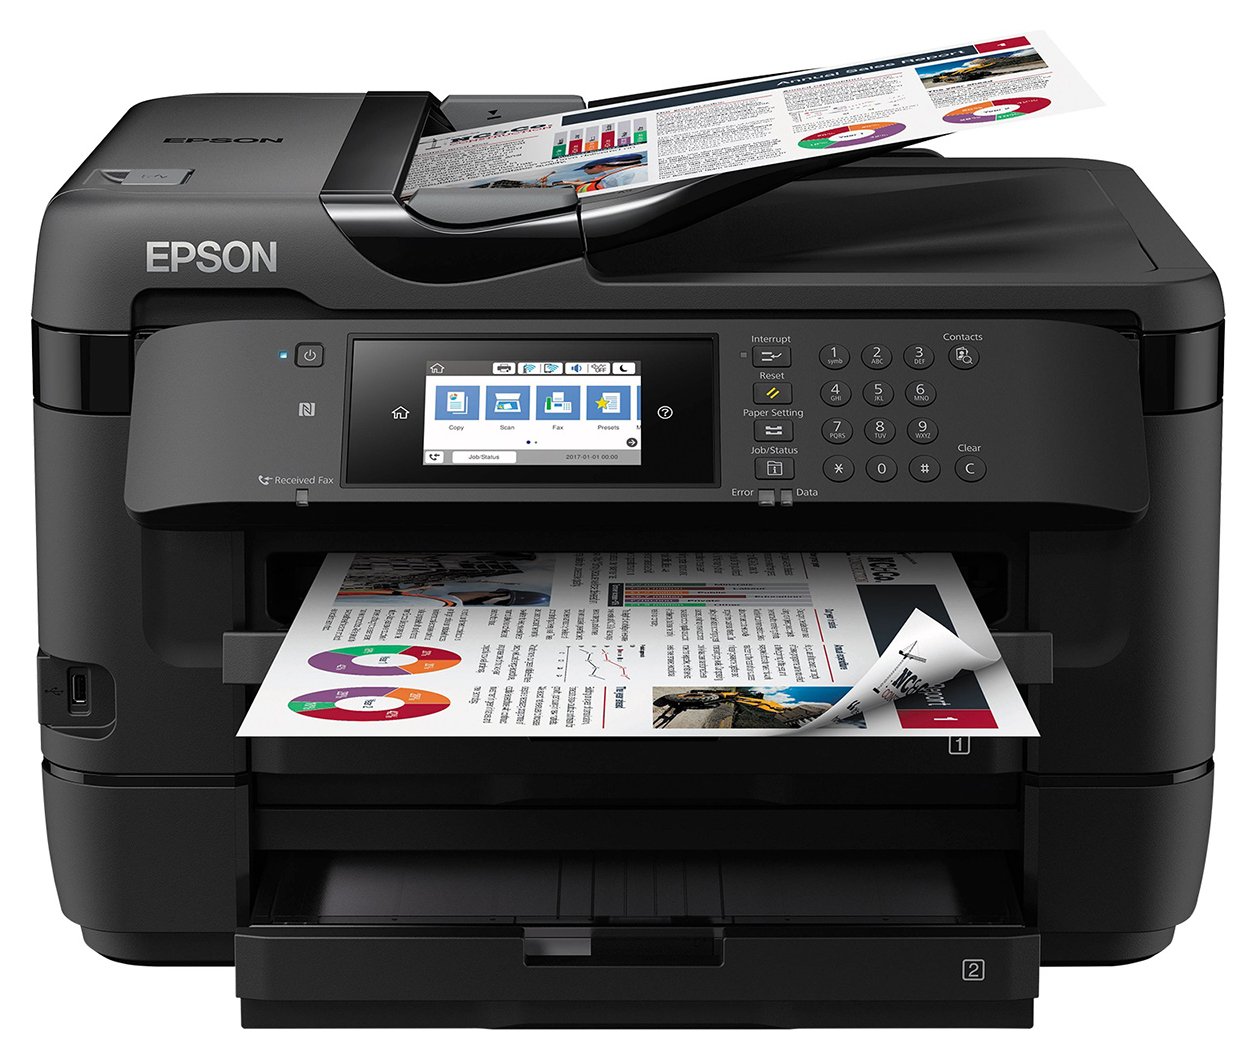 Epson Workforce Wf 7720 All In One Wireless Printer Reviews 6565